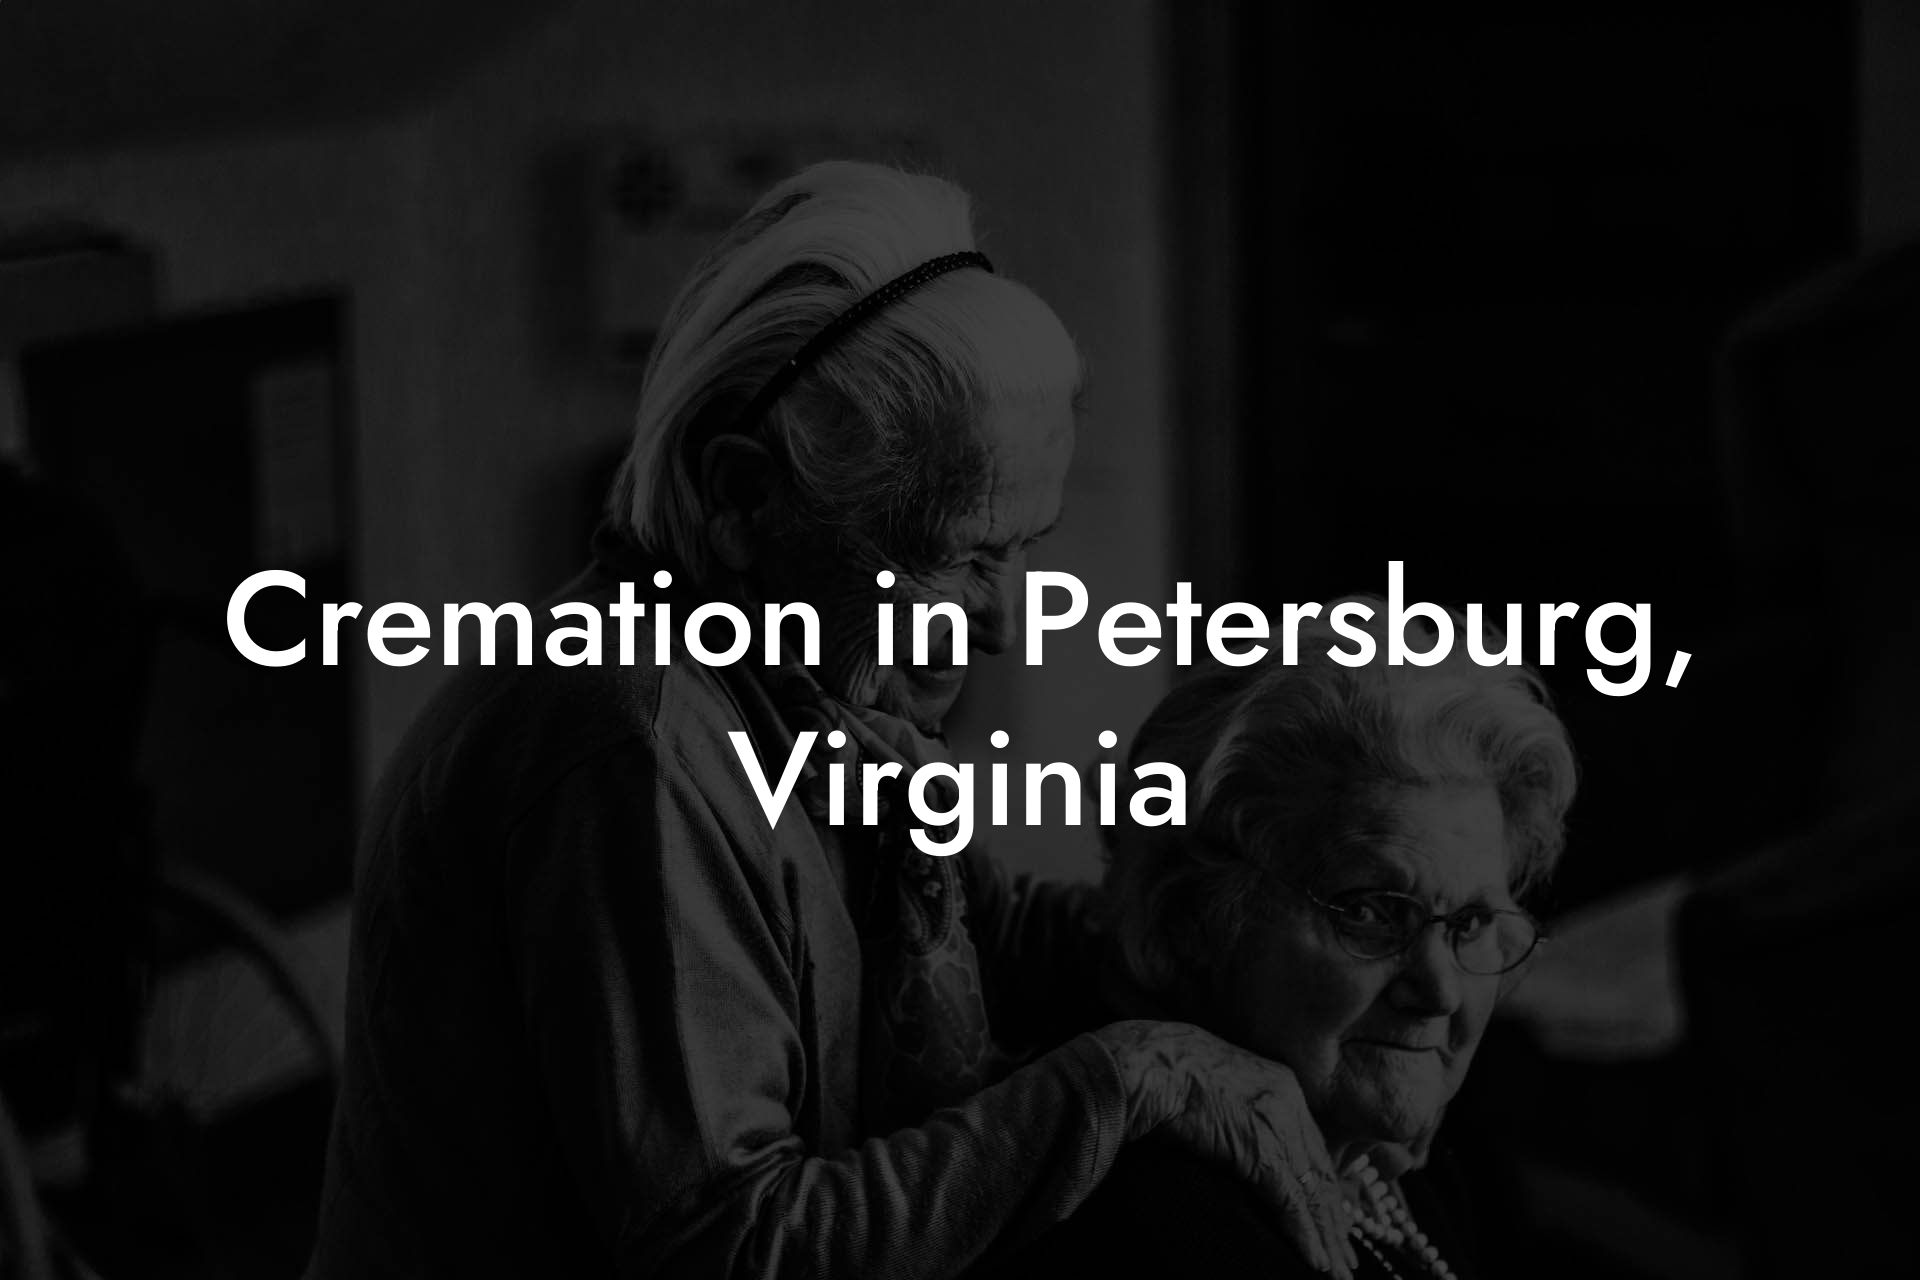 Cremation in Petersburg, Virginia